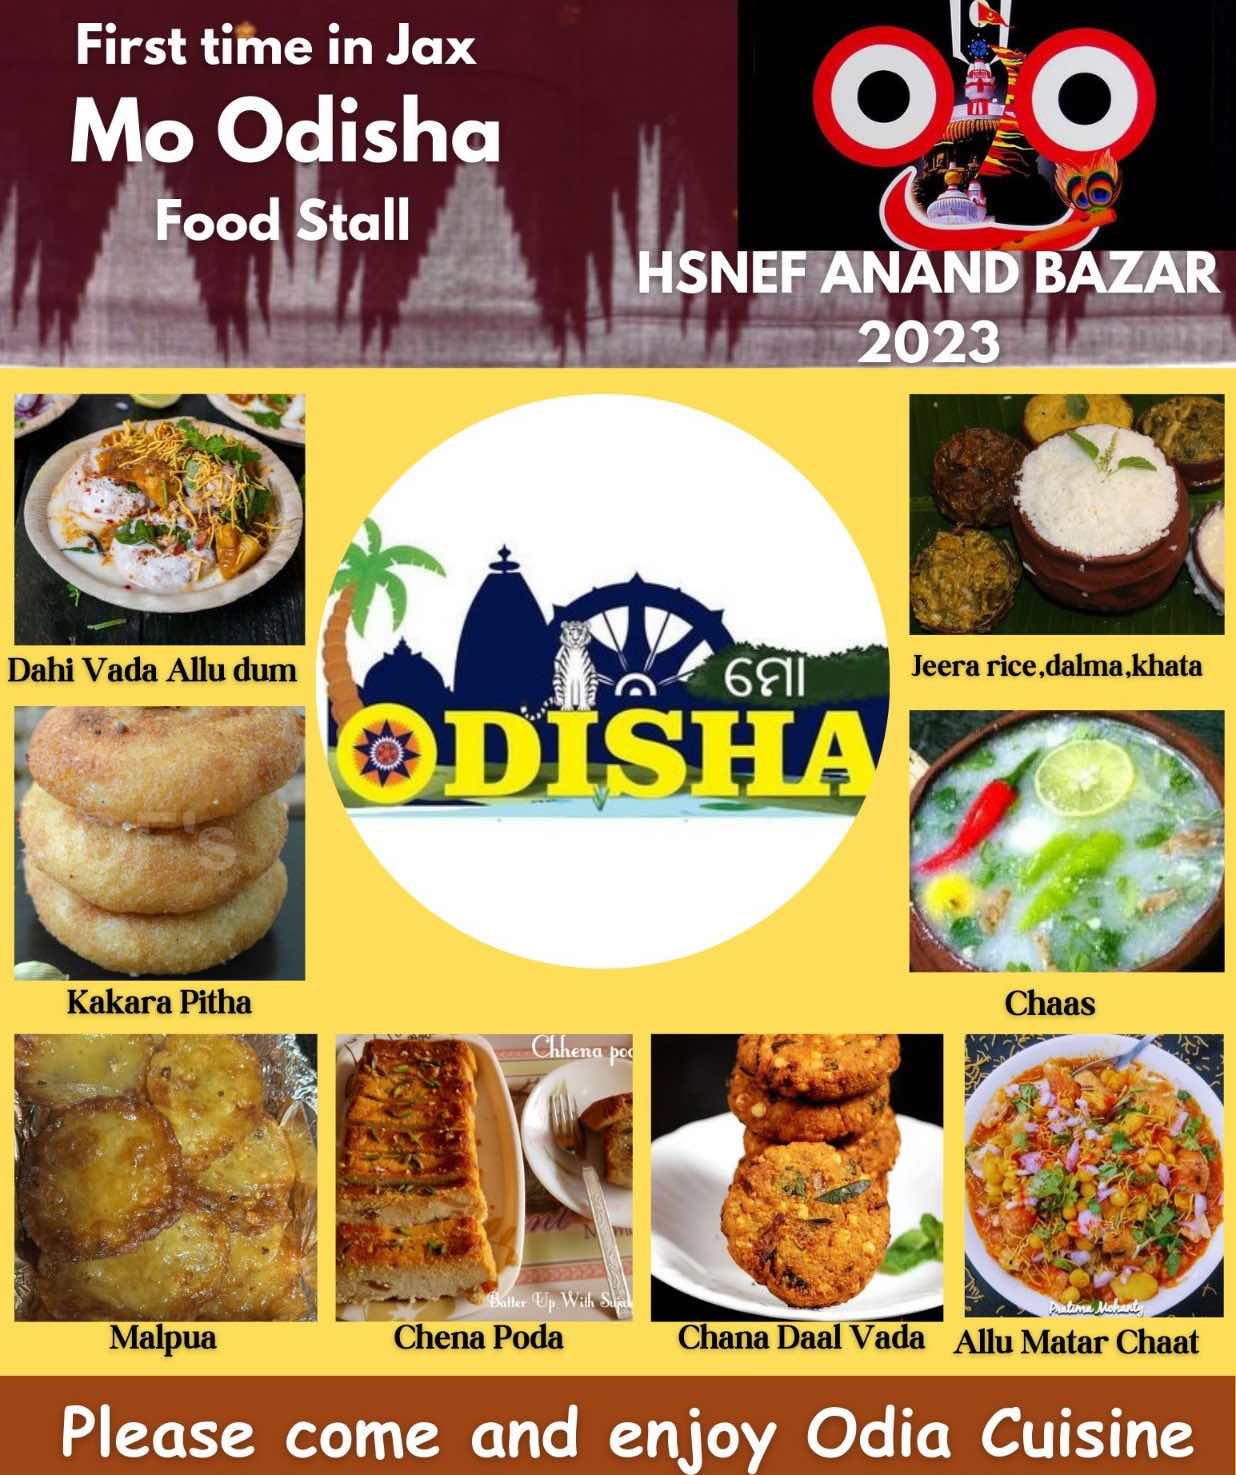 First time in Jax Mo Odisha Food Stall HSNEF ANAND BAZAR 2023 Dahi Vada Allu dum 691 ODISHA Jeera rice, dalma, khata Kakara Pitha Chaas thena bo Malpua Chena Poda Chana Daal Vada Allu Matar Chaat